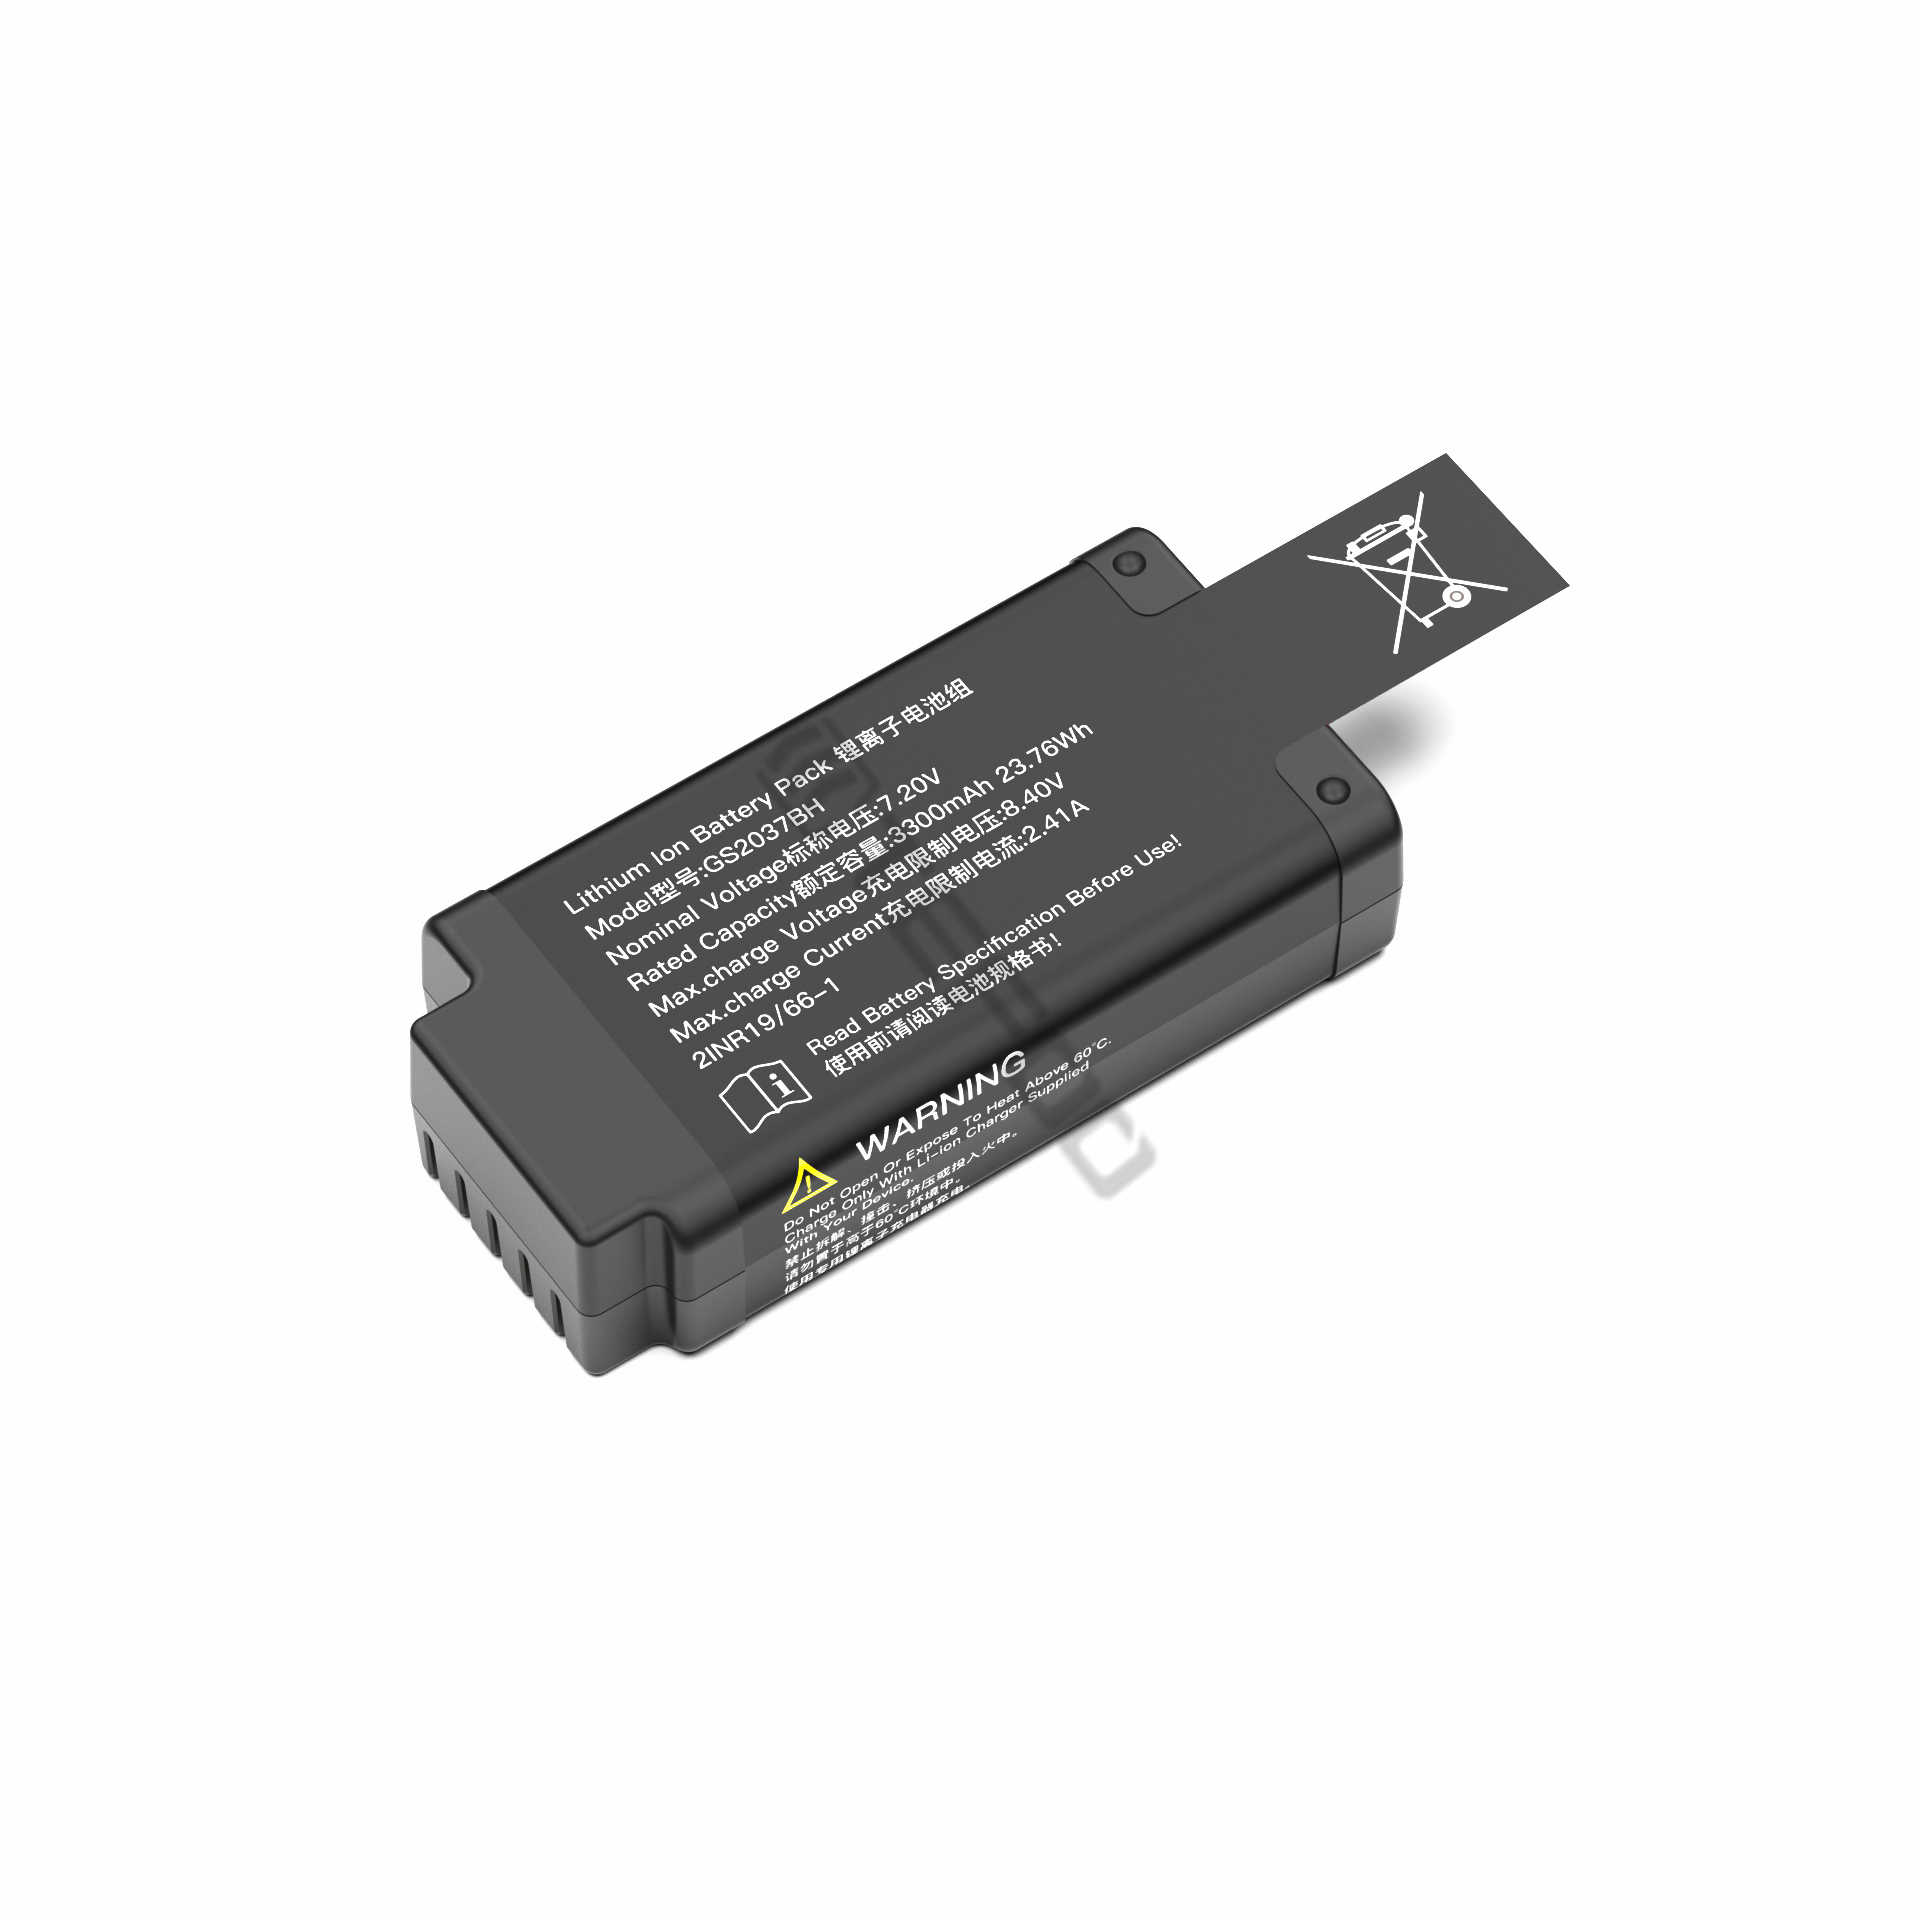 tefoo-standard-smart-battery-pack-GS2037BH-replacement-RRC-battery